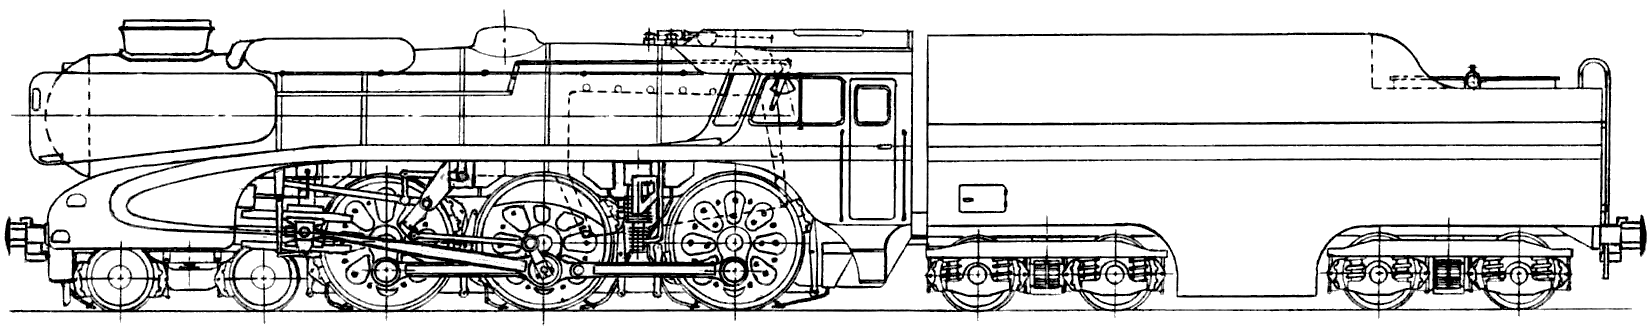 5AT Steam Locomotive blueprint